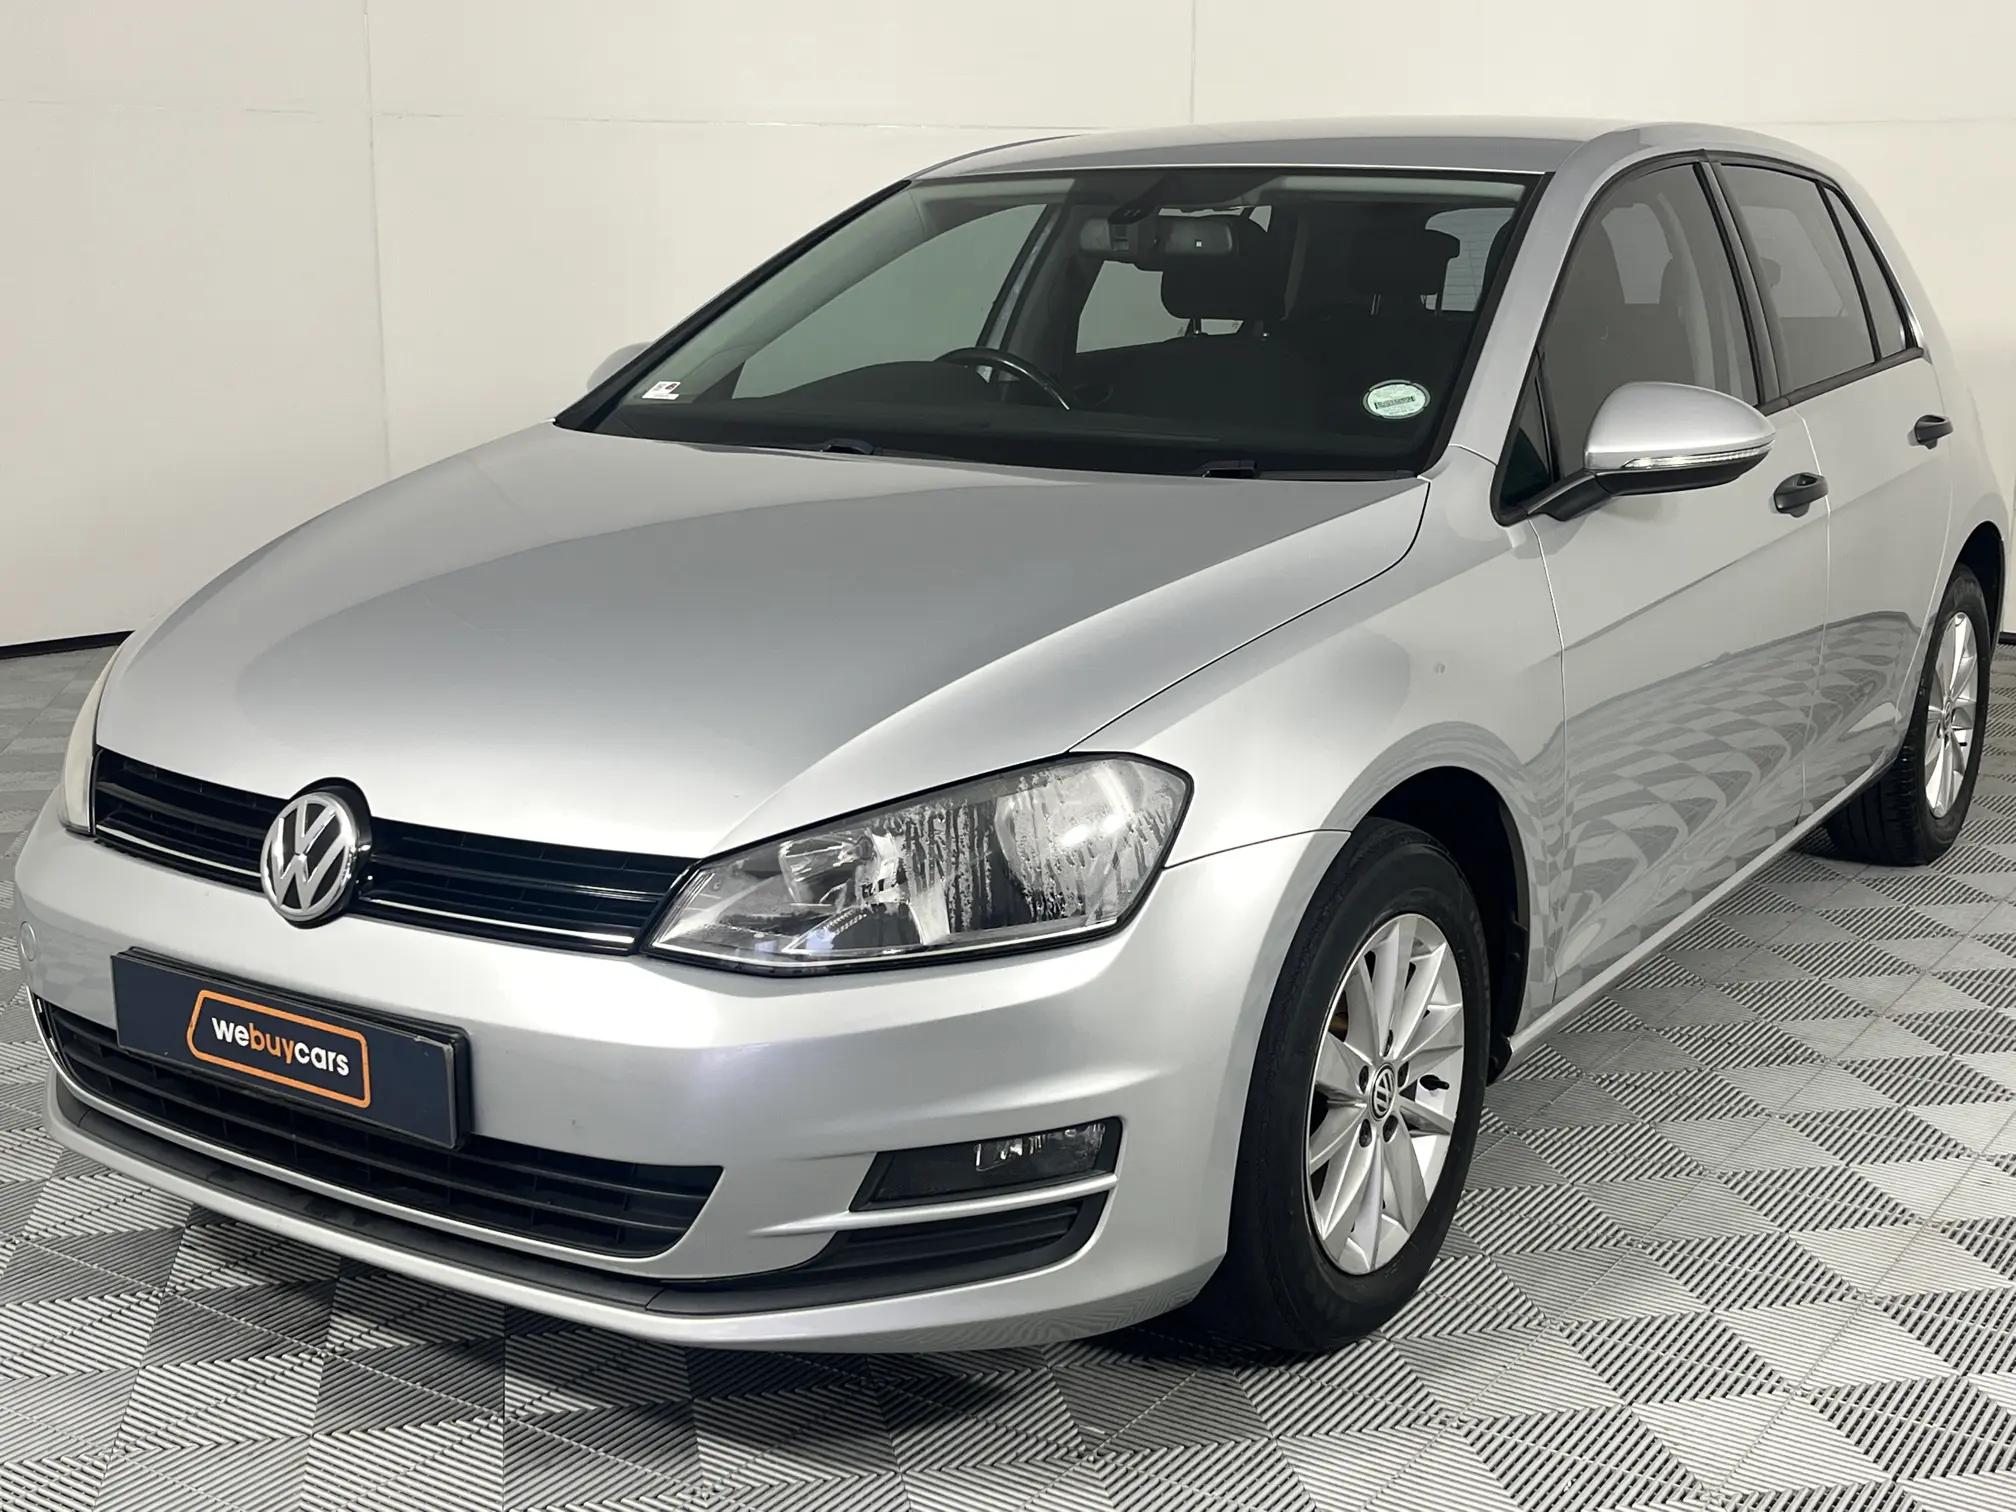 Afwezigheid partitie Maand Volkswagen (VW) Golf 7 1.2 TSi Trendline for sale - R 157 900 |  Carfind.co.za